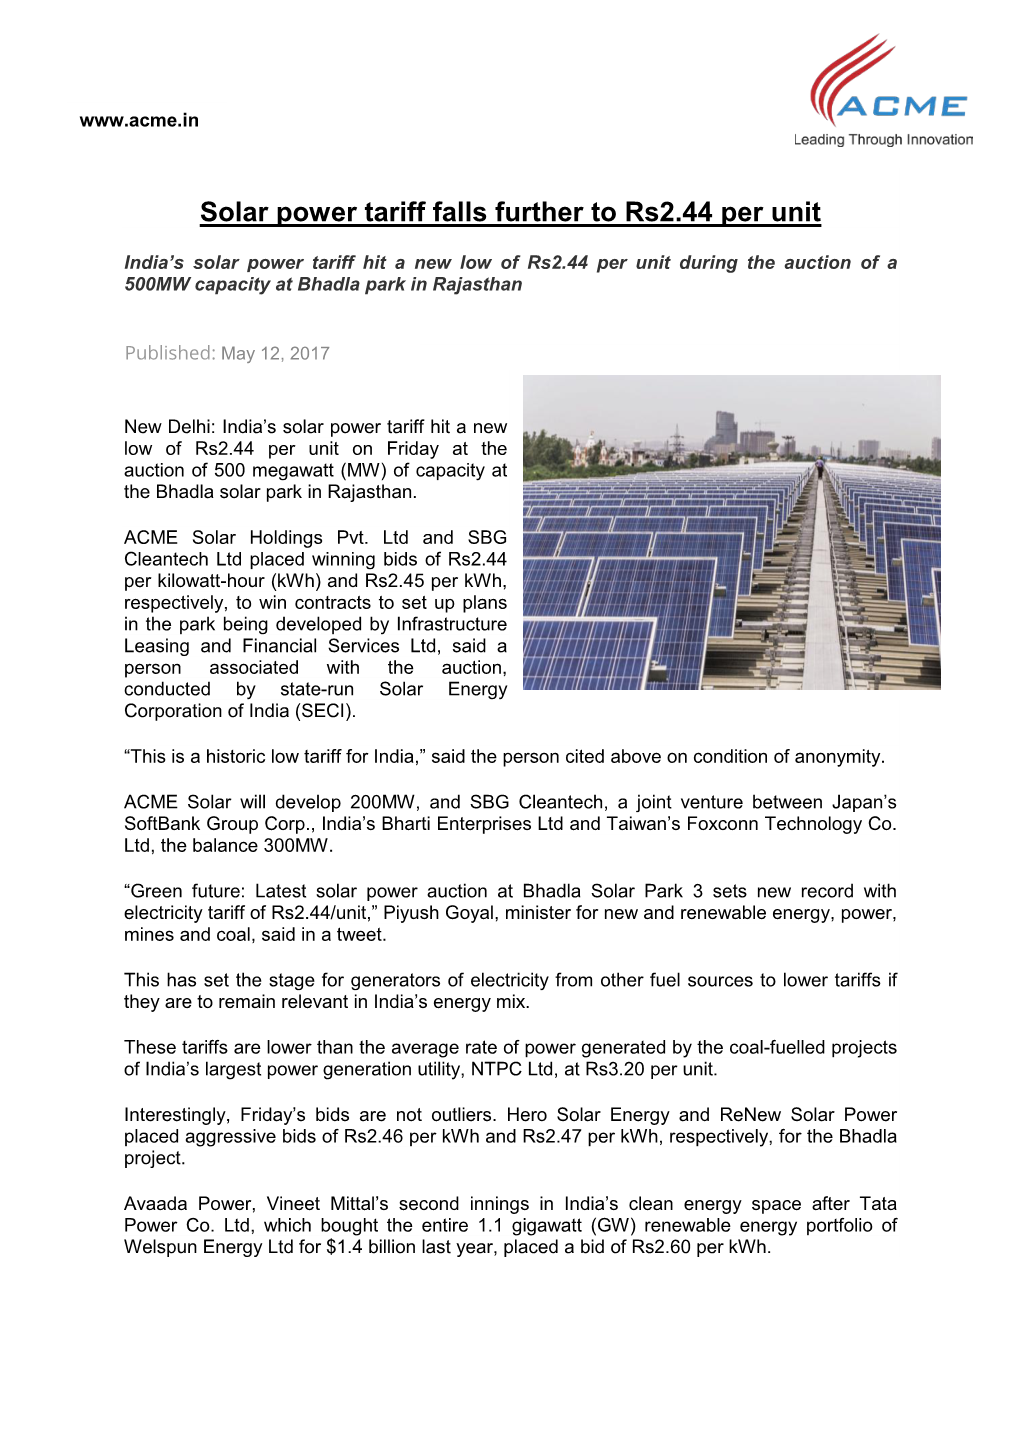 Solar Power Tariff Falls Further to Rs2.44 Per Unit